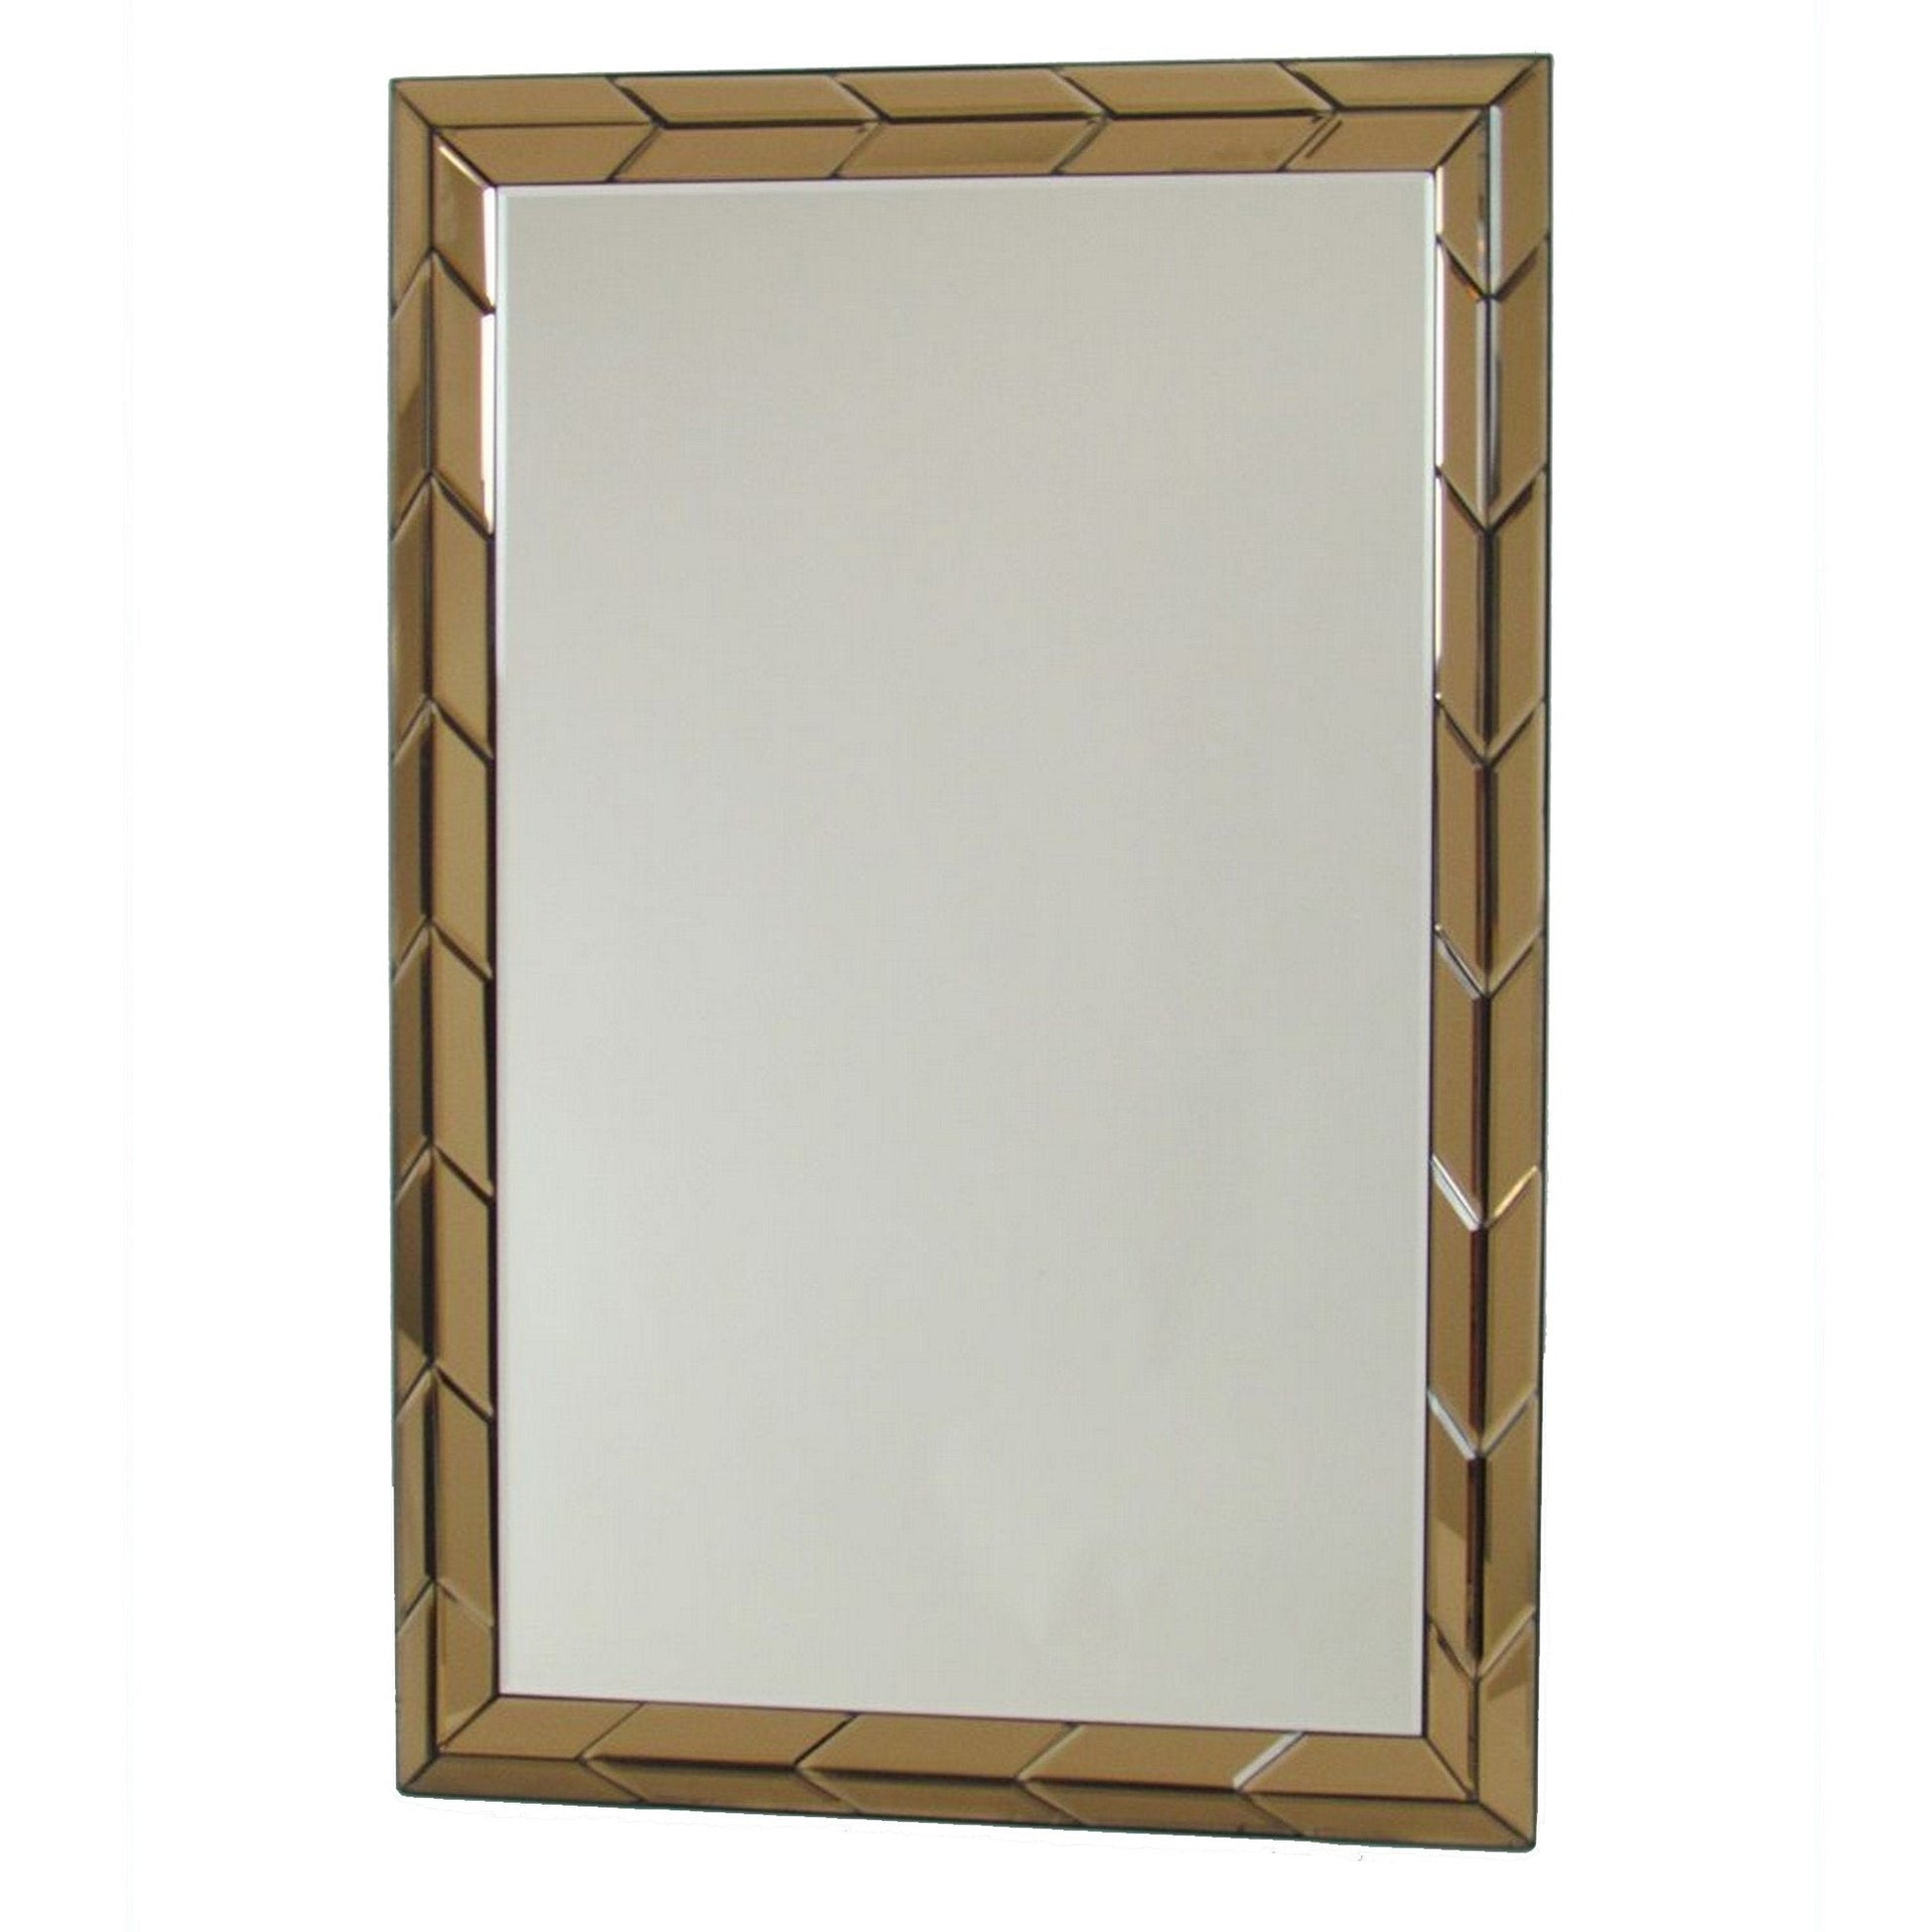 Benzara 35" Rectangular Brown and Silver Wooden Framed Beveled Wall Mirror